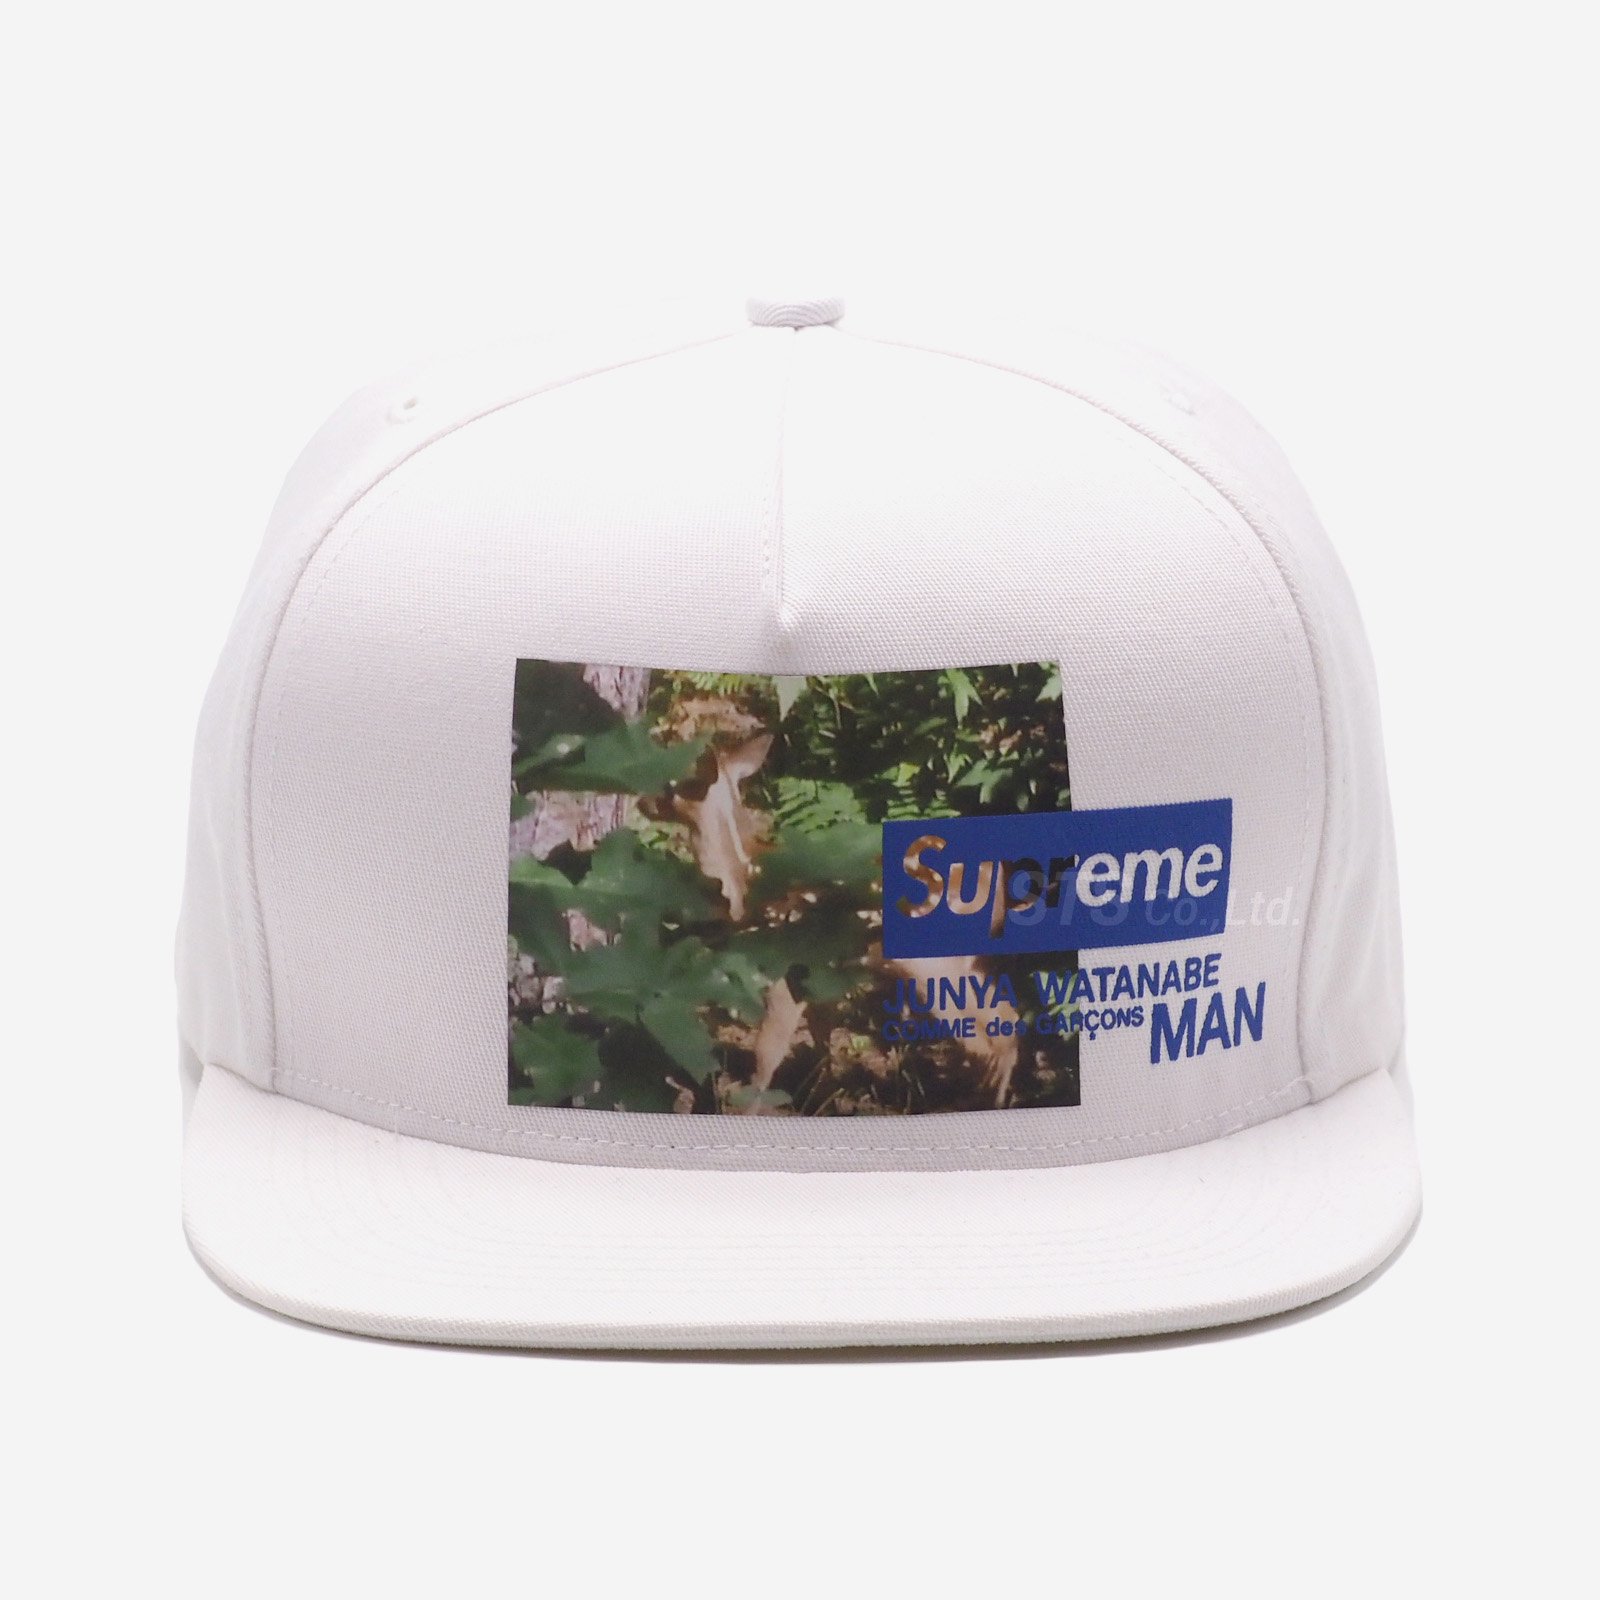 Supreme/JUNYA WATANABE COMME des GARCONS MAN Nature 5-Panel Hat ...